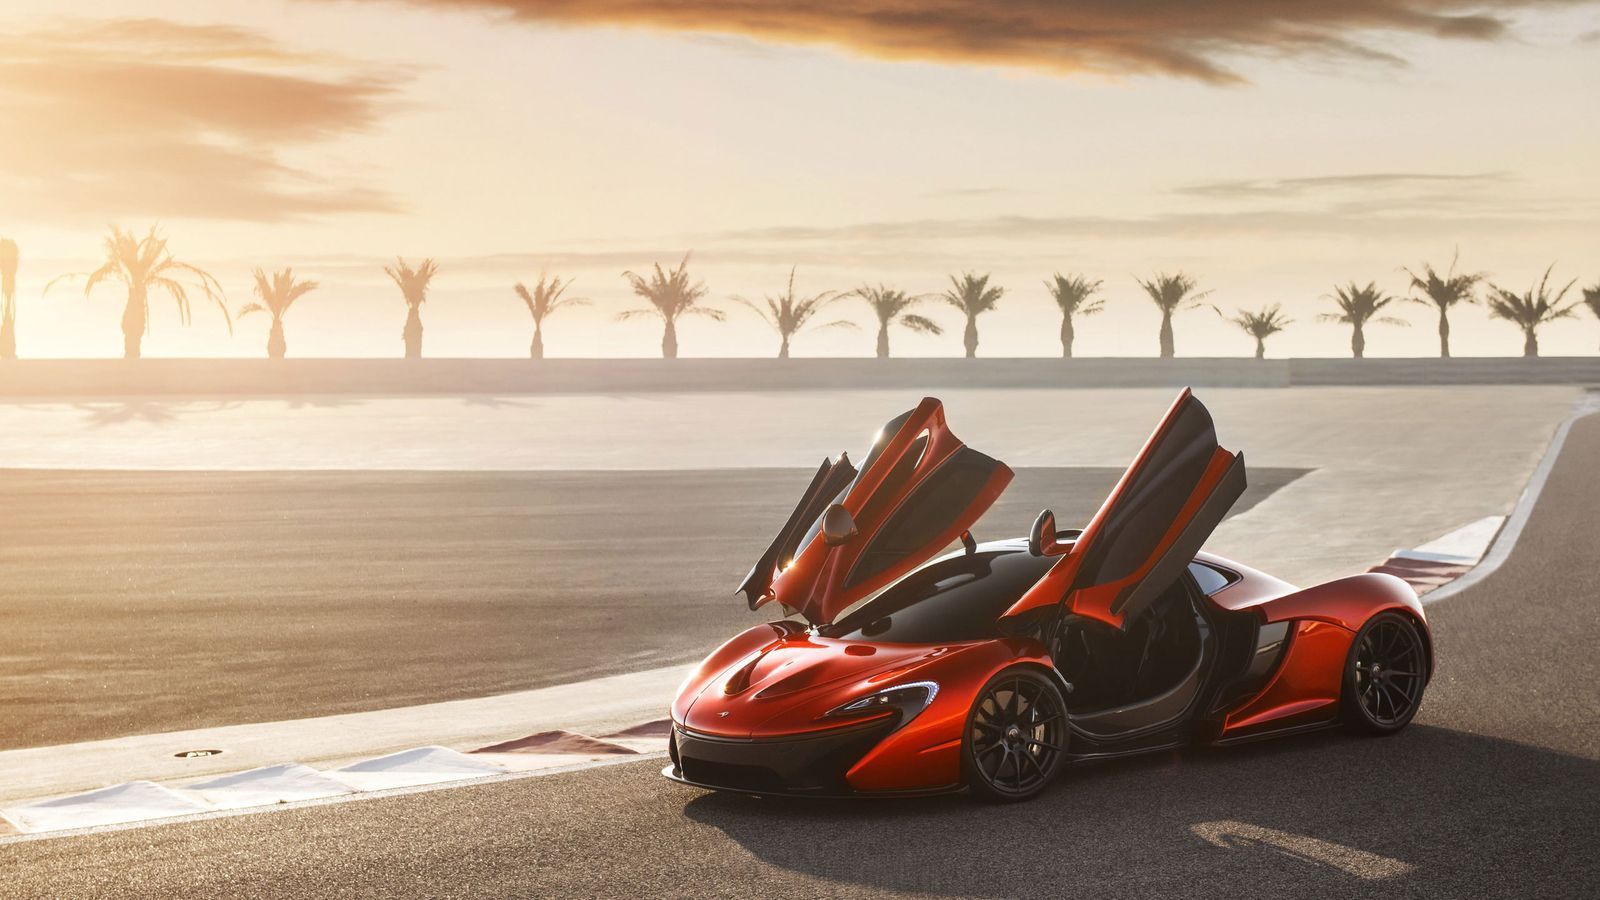 McLaren supercar wallpaper download 49700 - Automotive Wallpapers ...